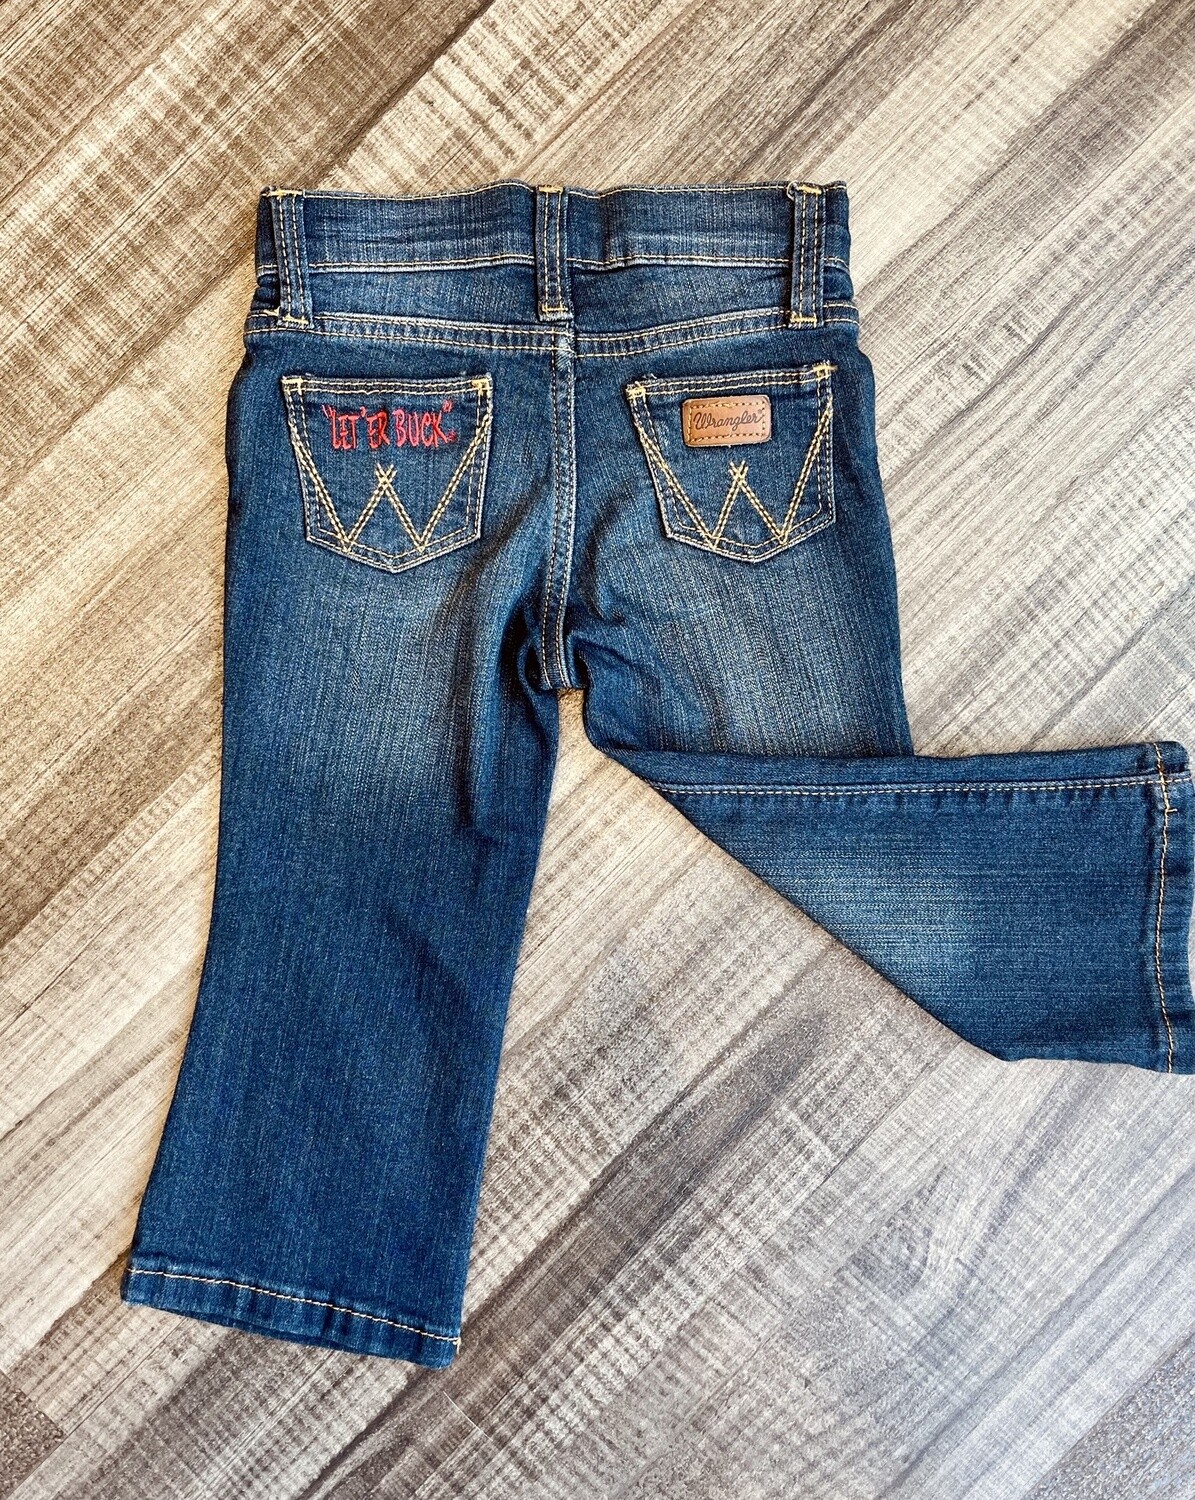 Toddler Wrangler Pendleton Round-Up Jeans, size: 2T